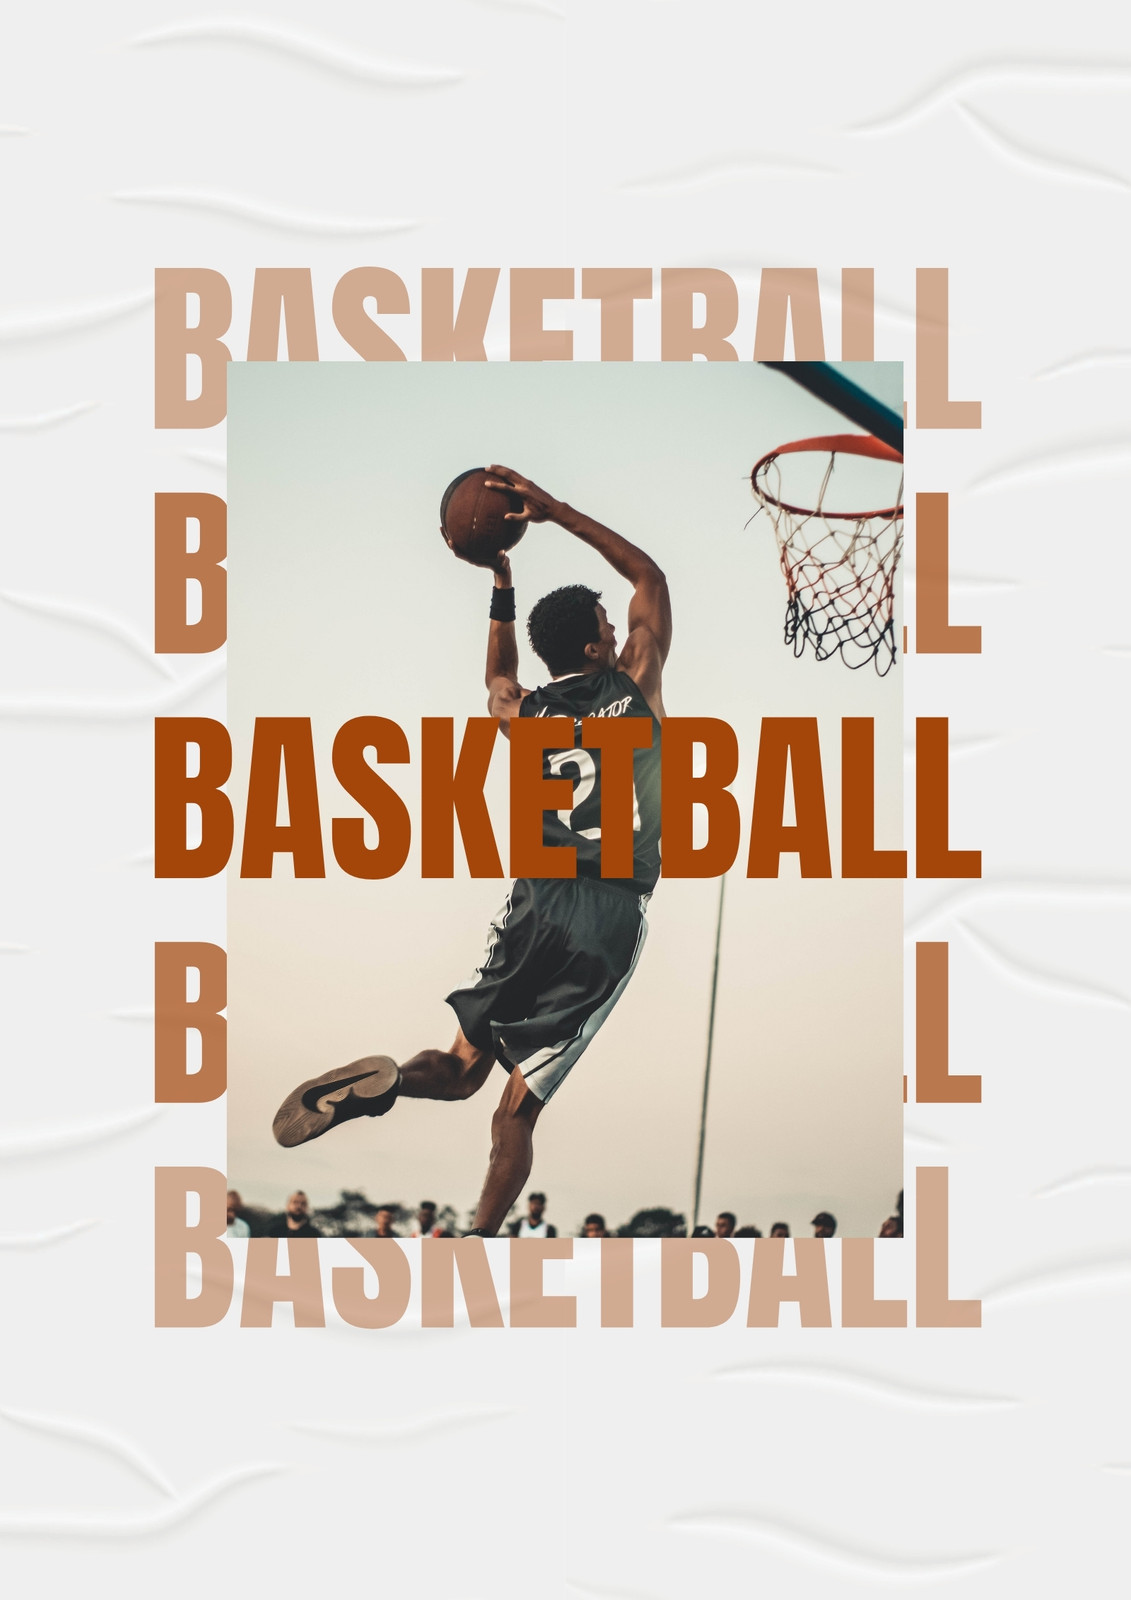 Customize 118+ Basketball Poster Templates Online - Canva